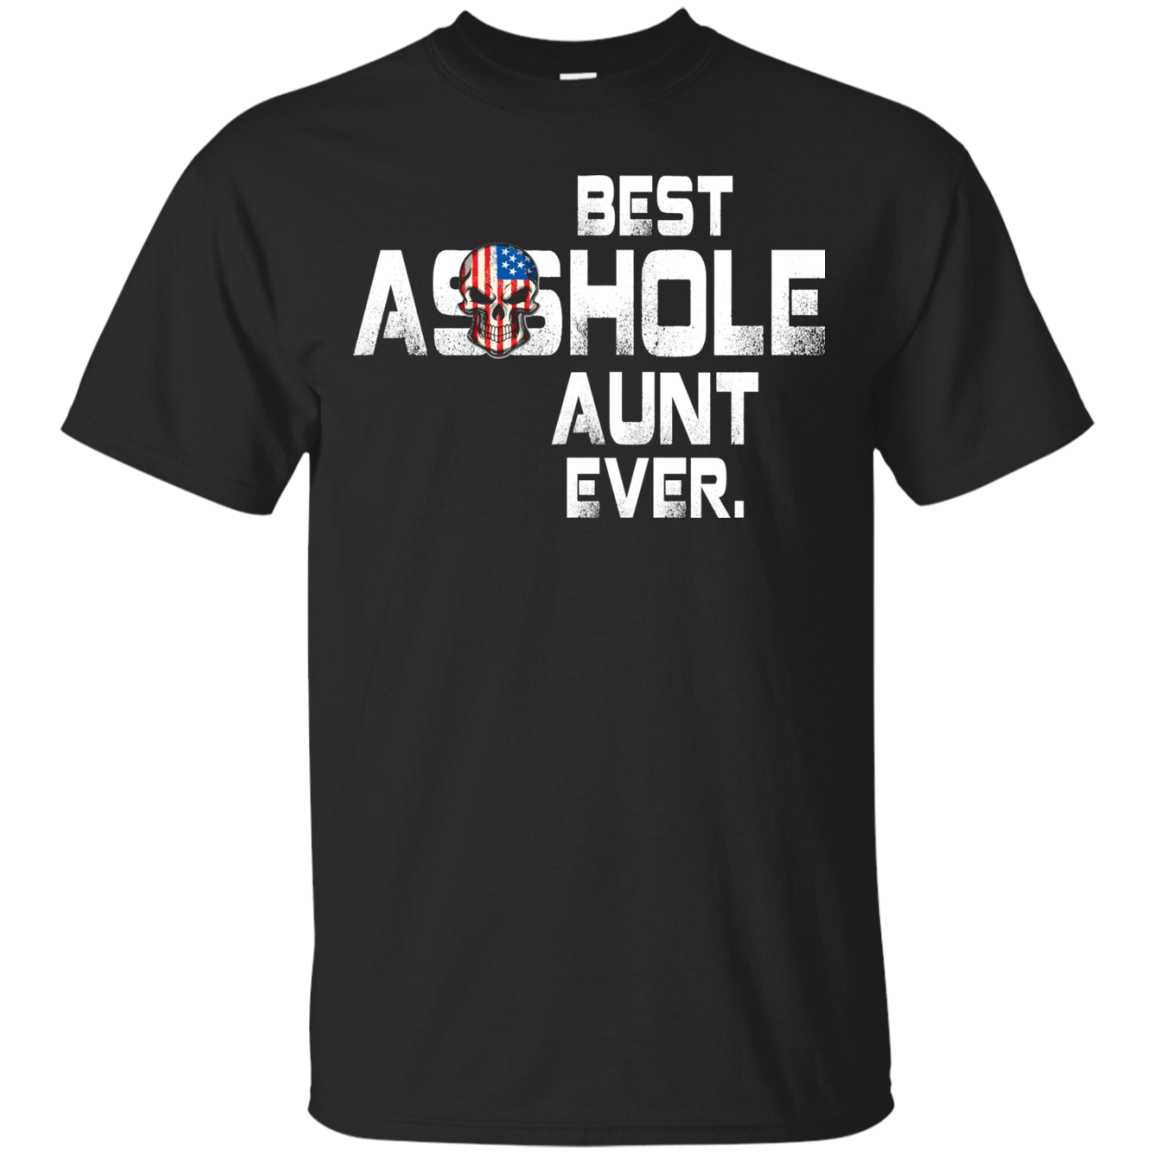 Best Asshole Aunt Ever t-shirt, hoodie, tank